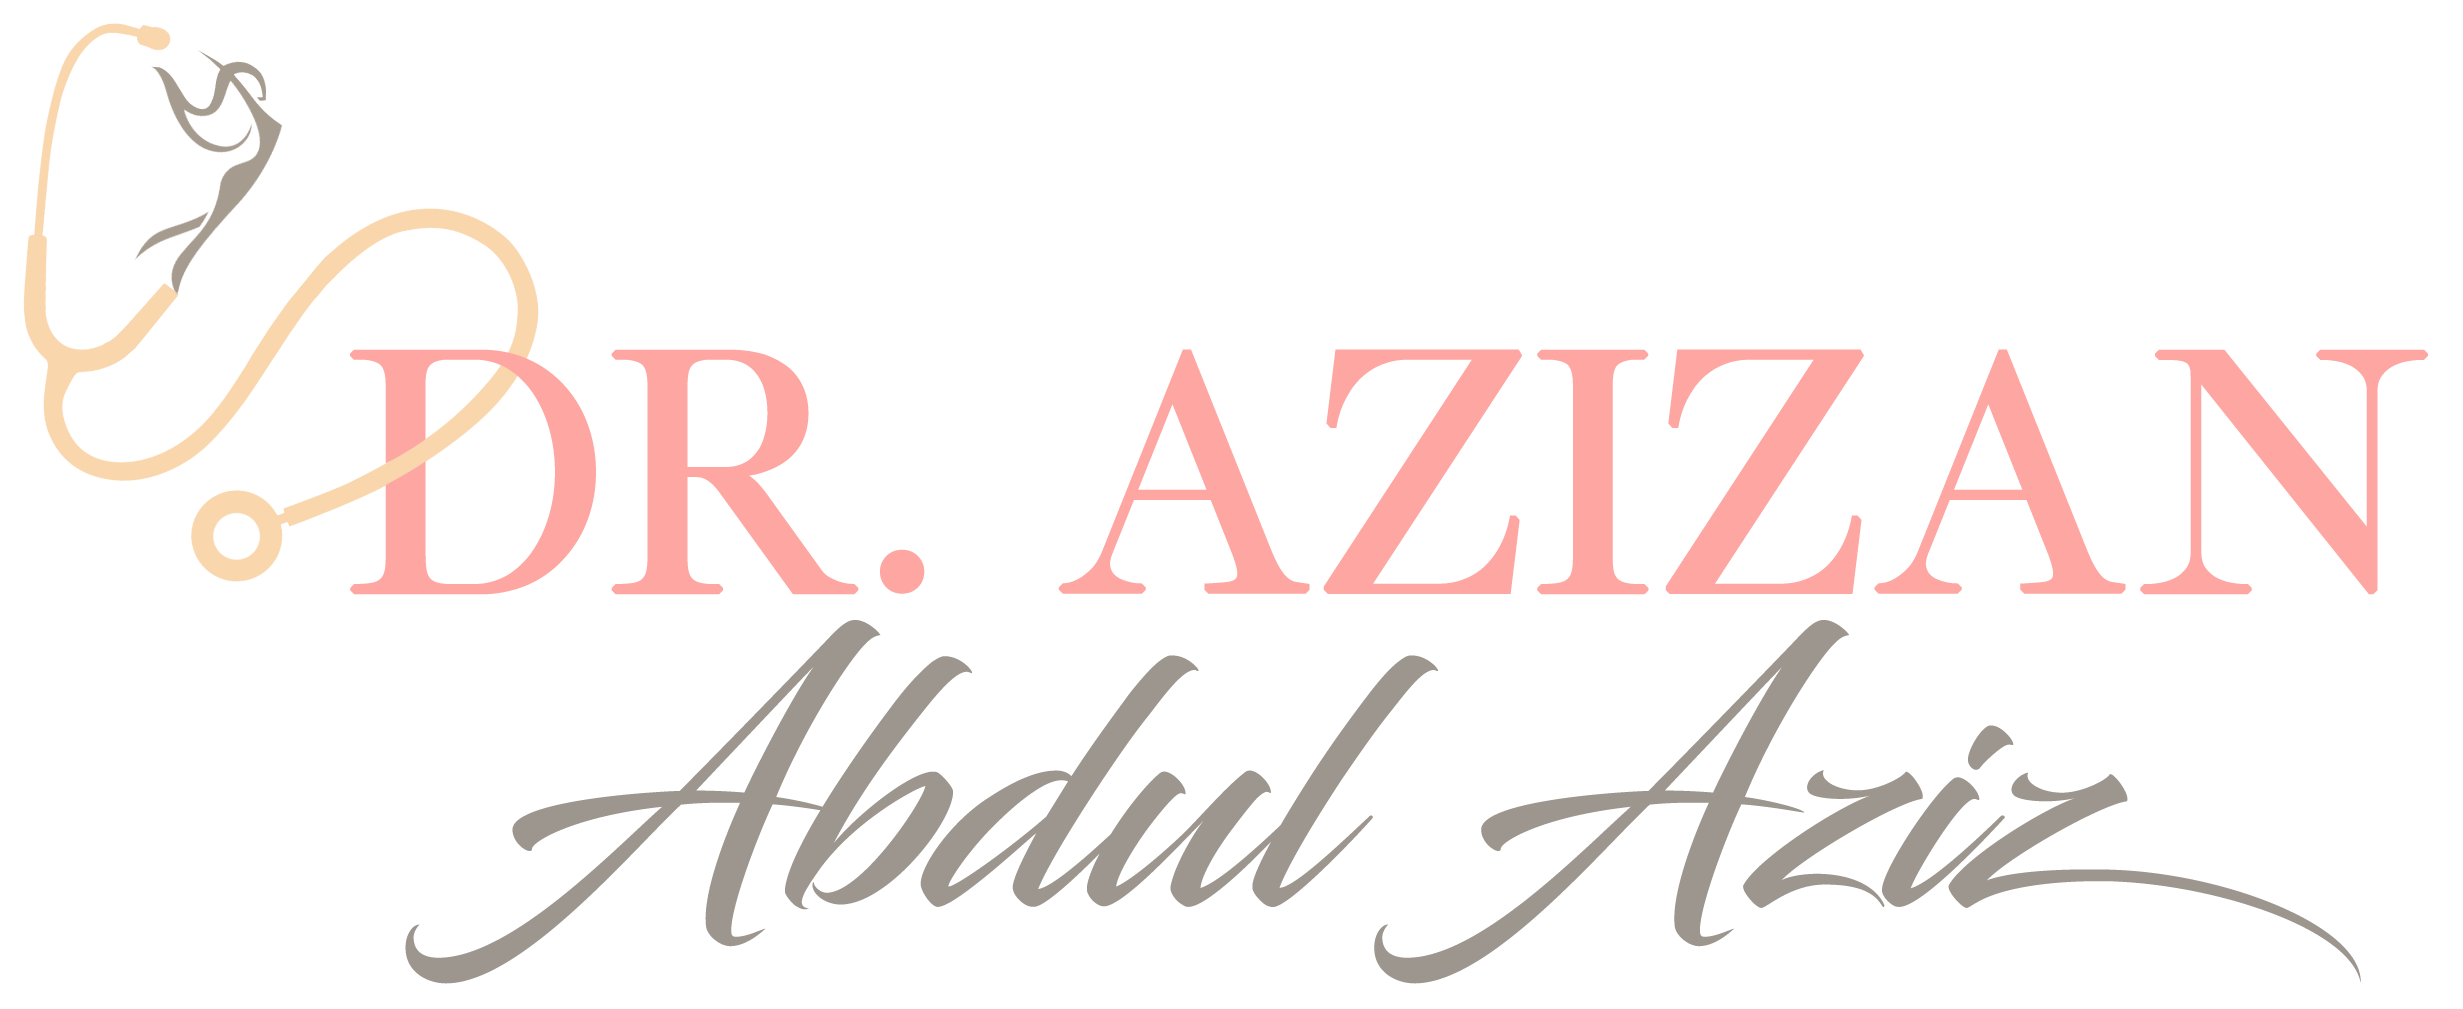 Dr. Azizan Abdul Aziz